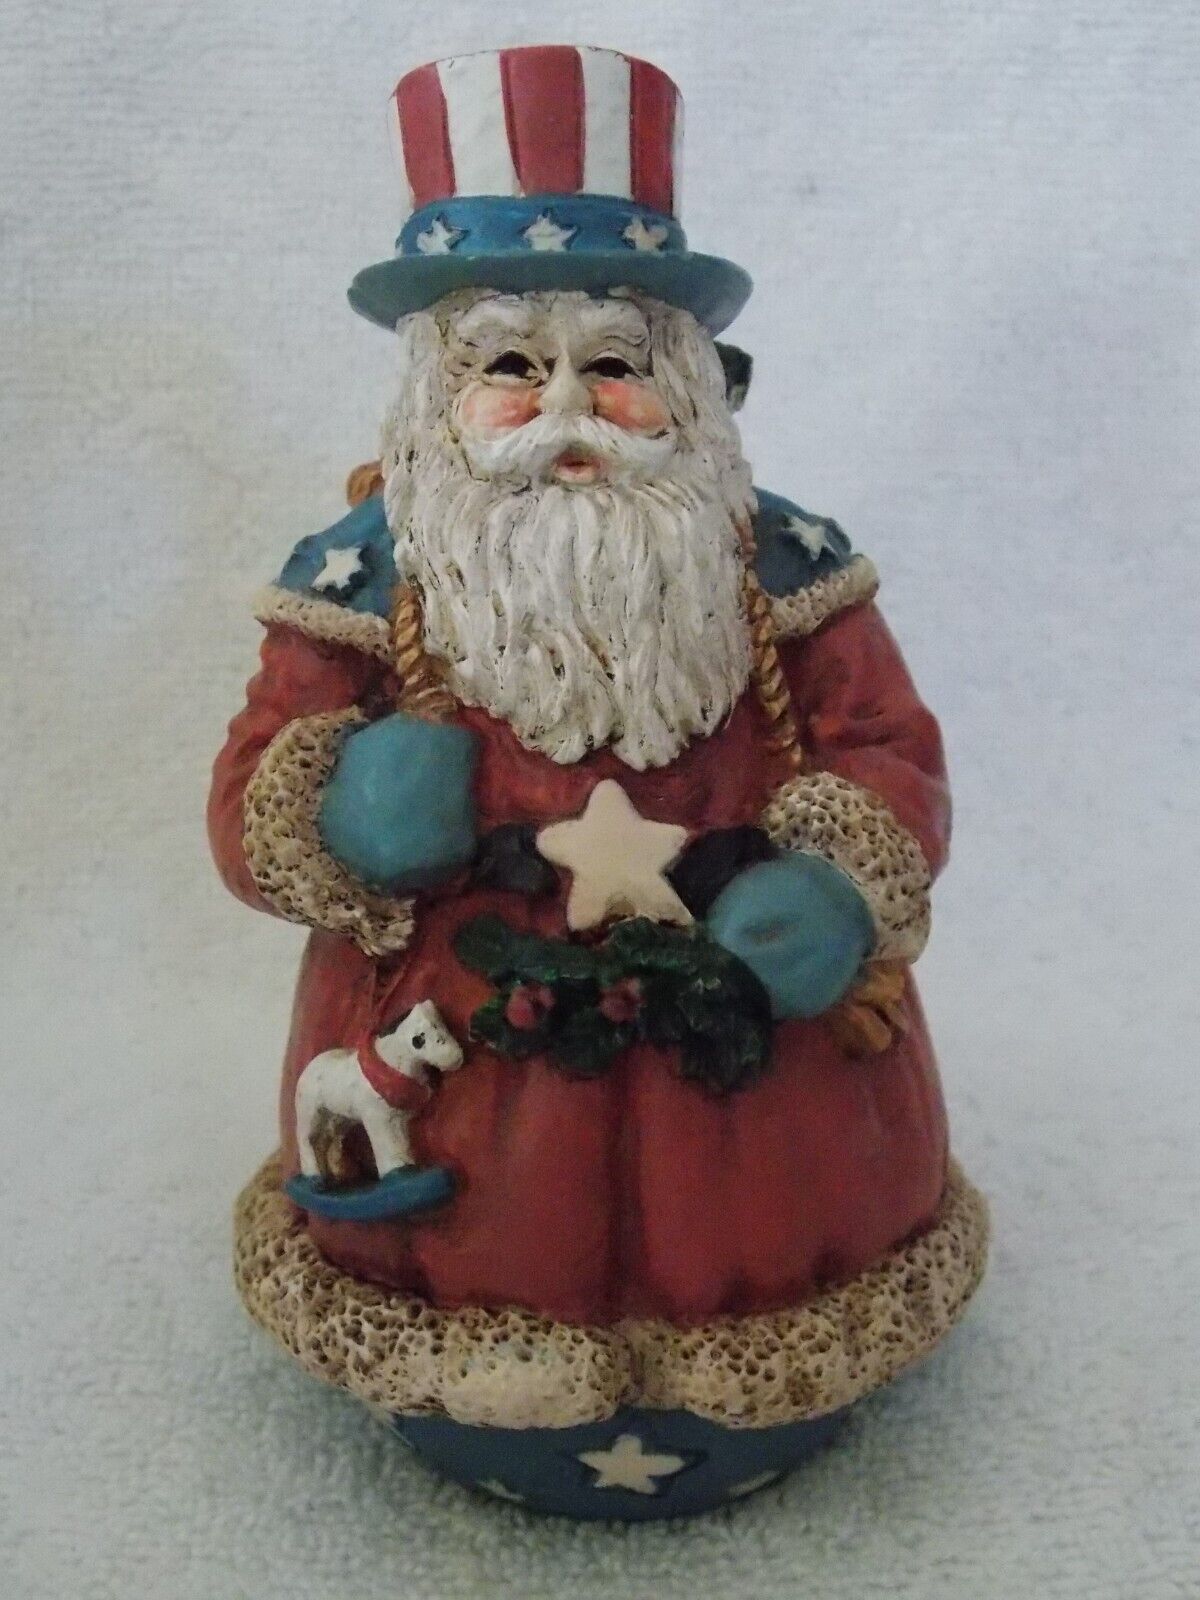 Vintage Midwest Patriotic Santa Claus Figurine